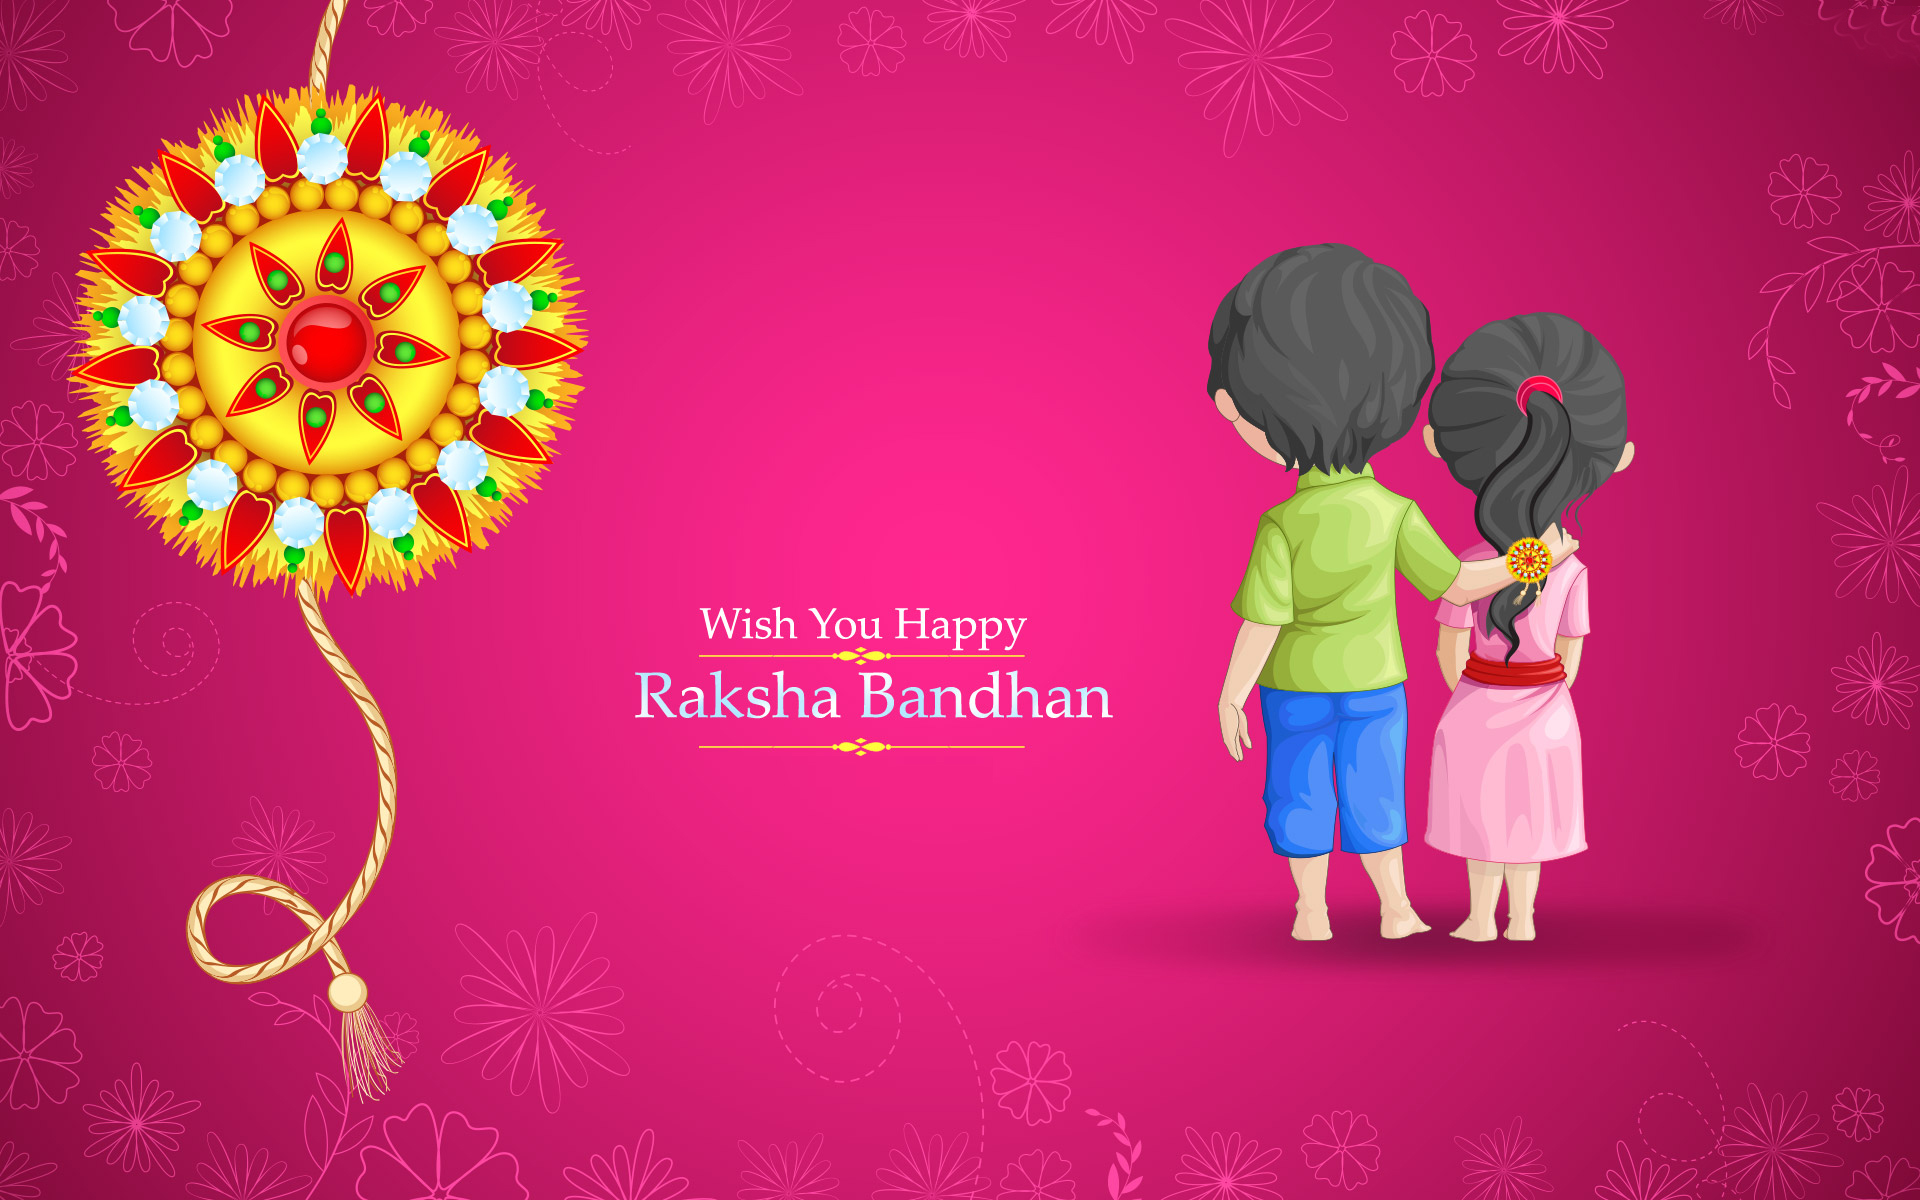 Happy Raksha Bandhan Greeting